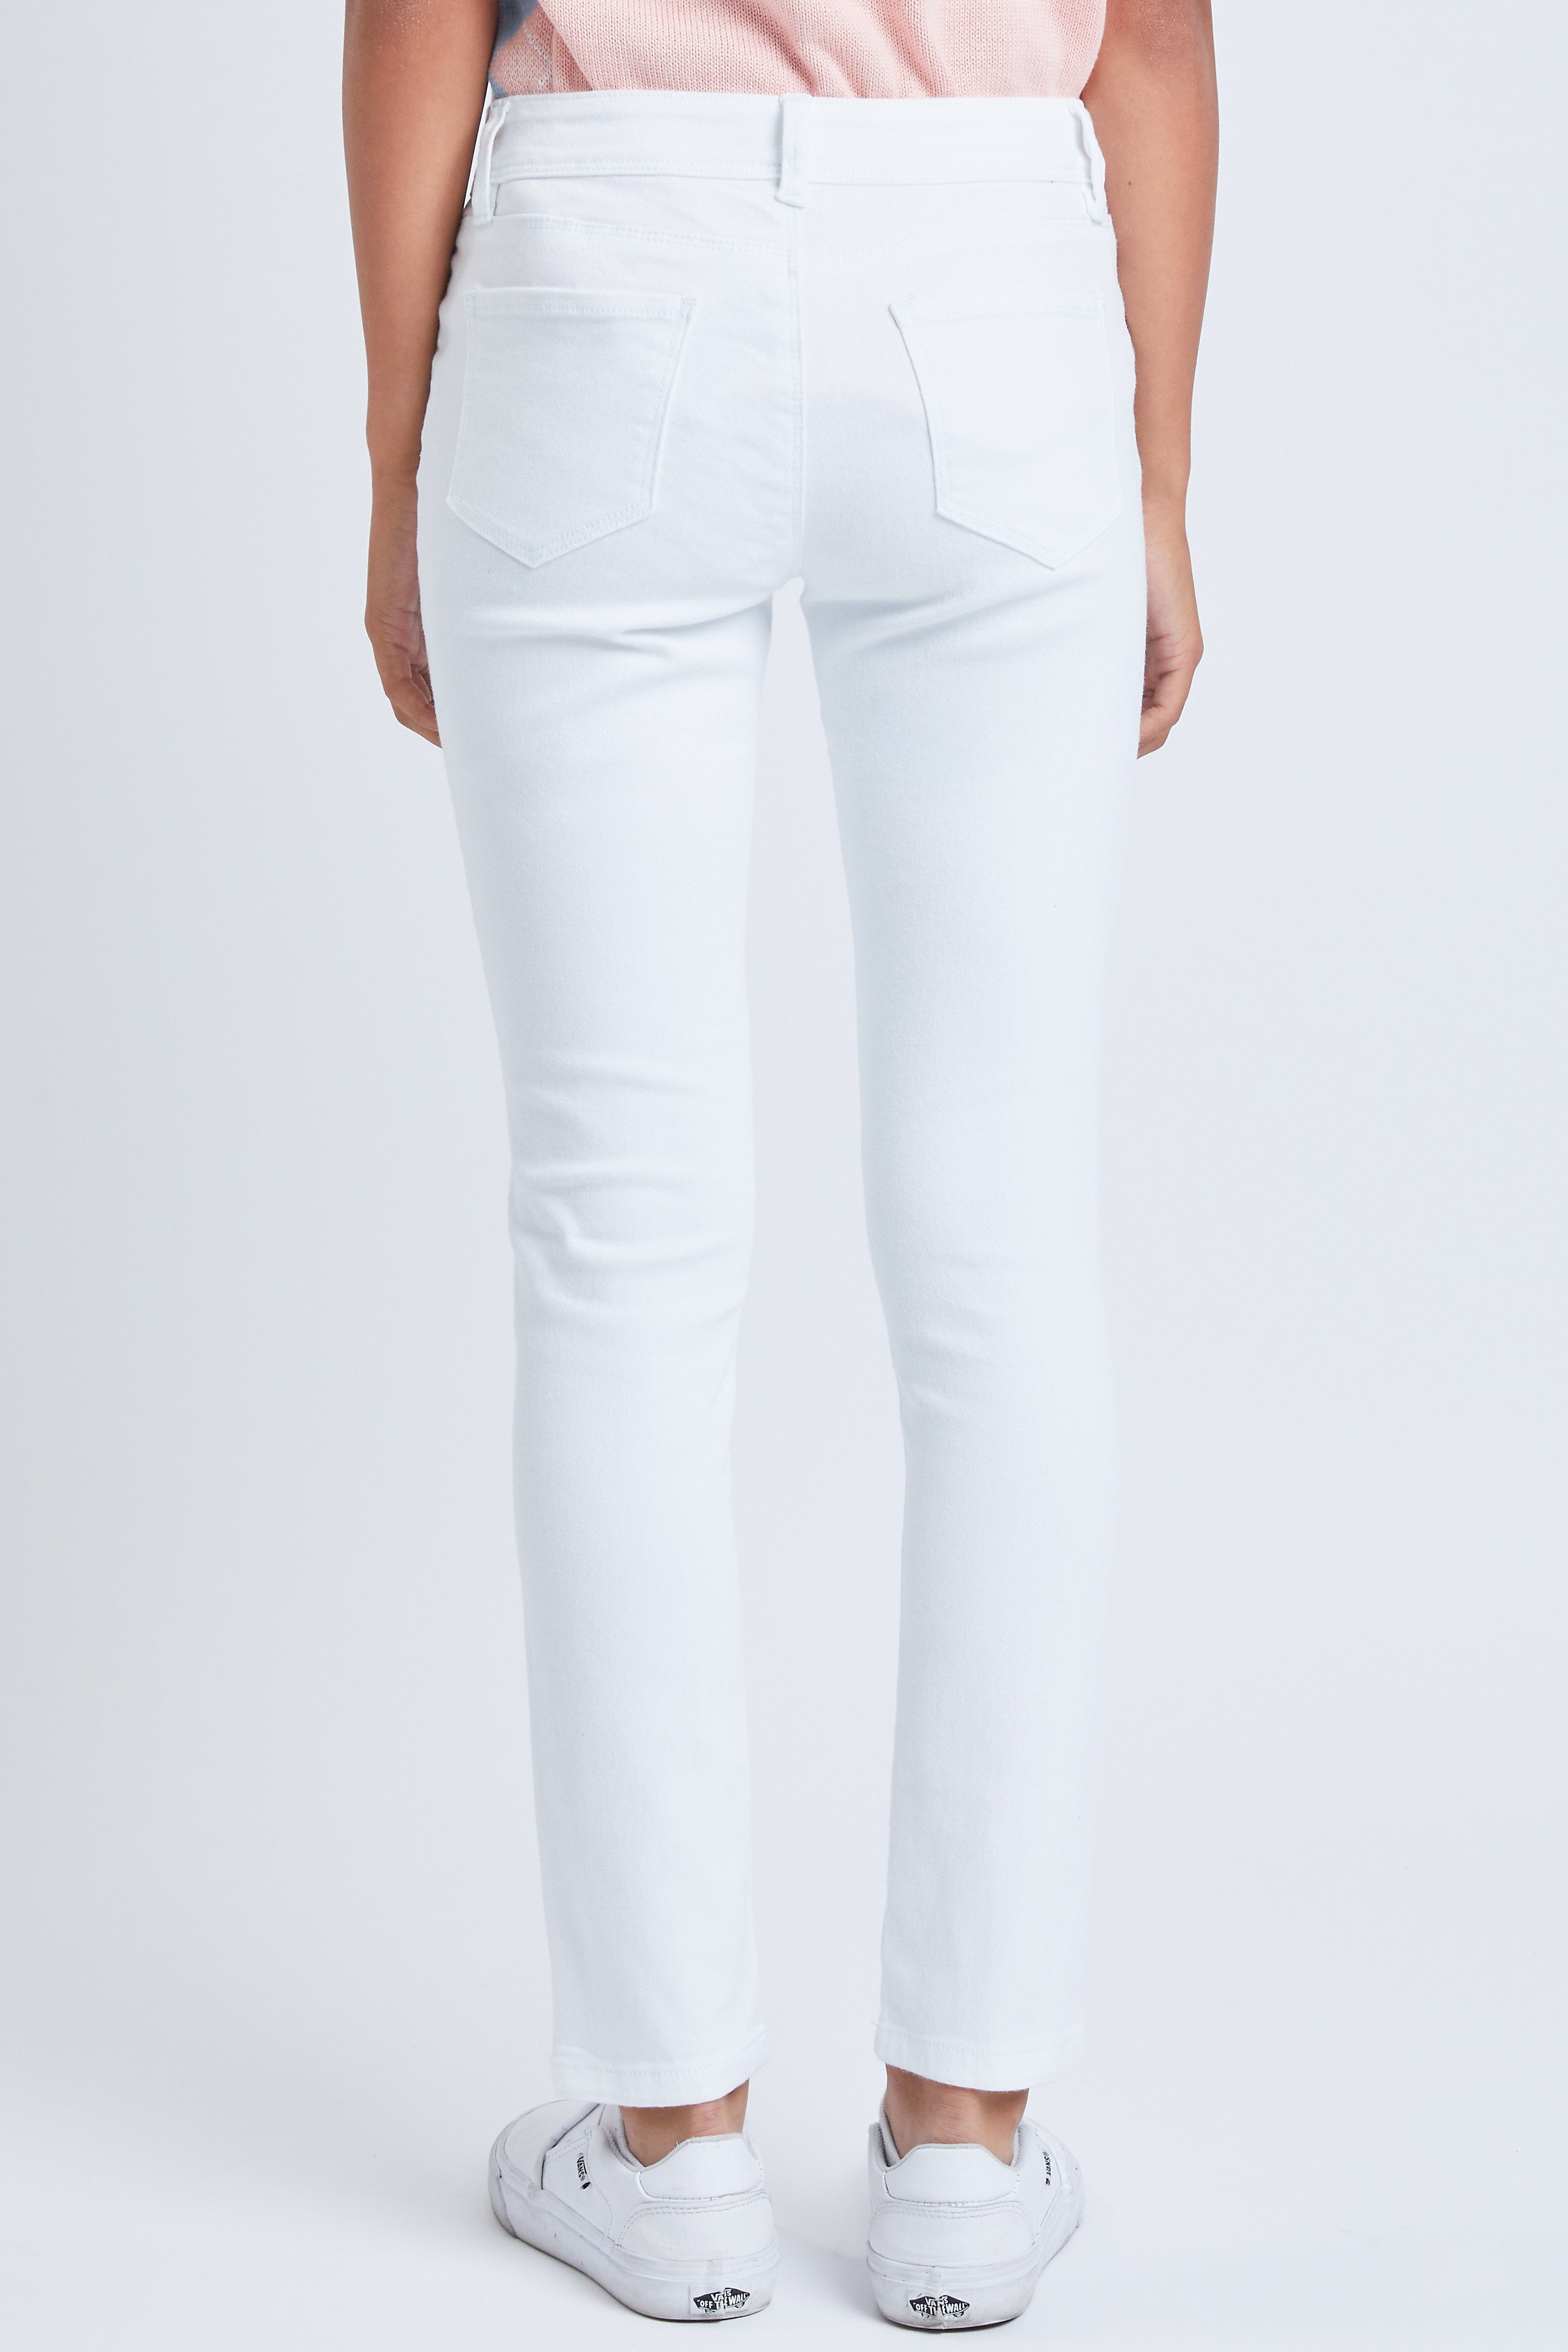 Buy Girls White Slim Fit Jeans Online - 733798